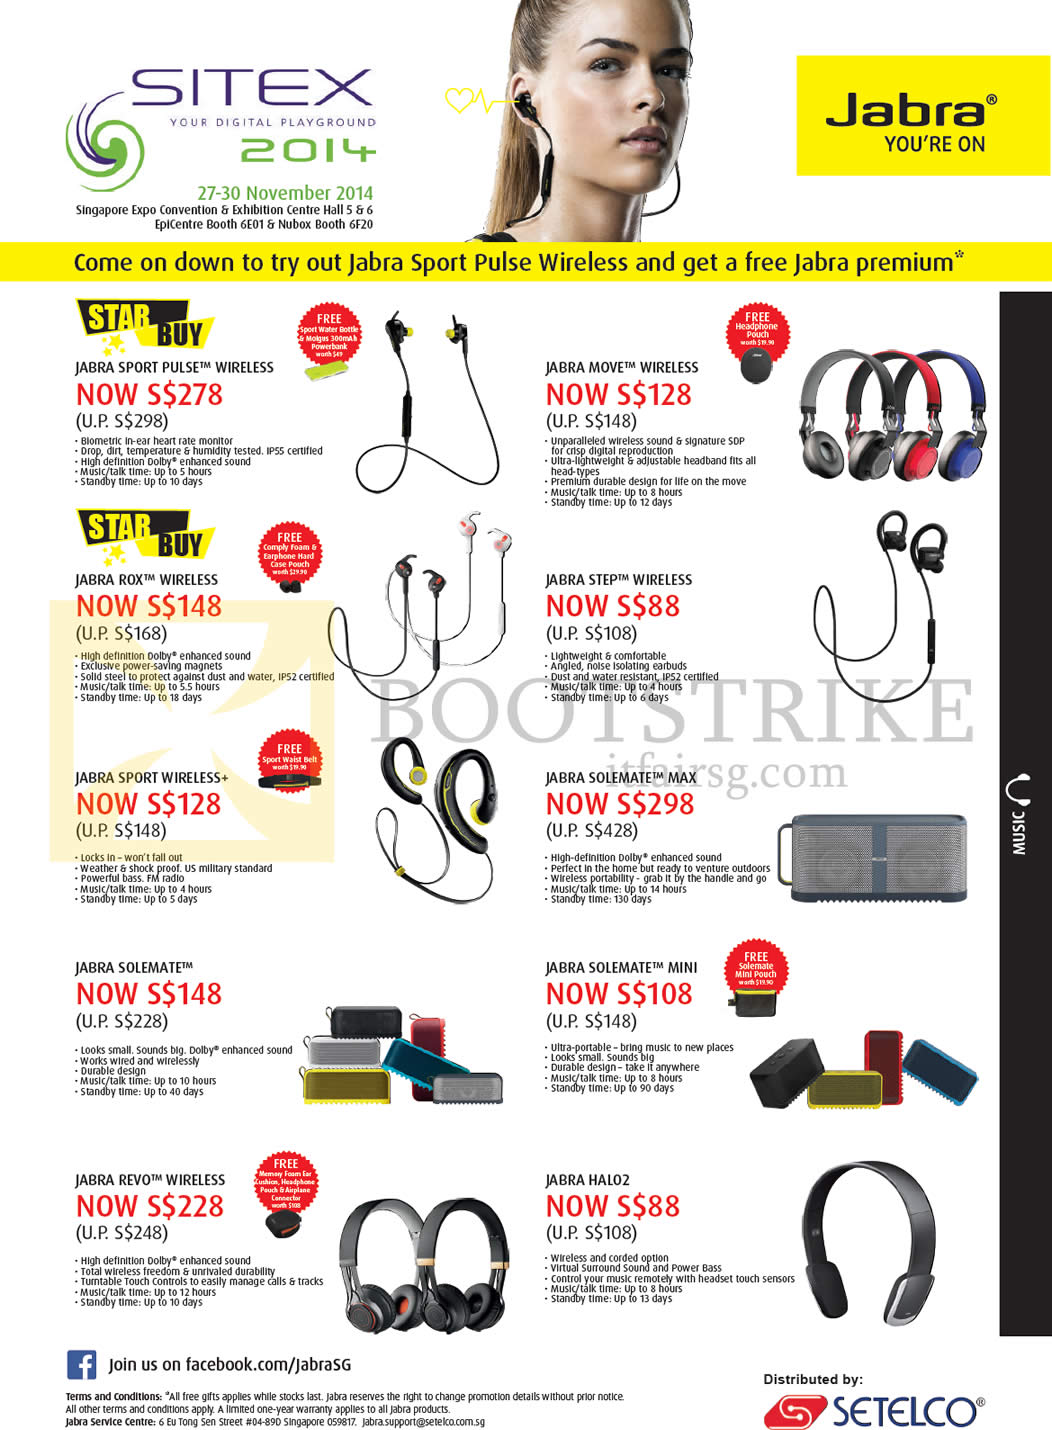 SITEX 2014 price list image brochure of Jabra Headphones, Earphones, Speakers, Sport Pulse Wireless, Solemate, Revo, Haloz, Step, Move